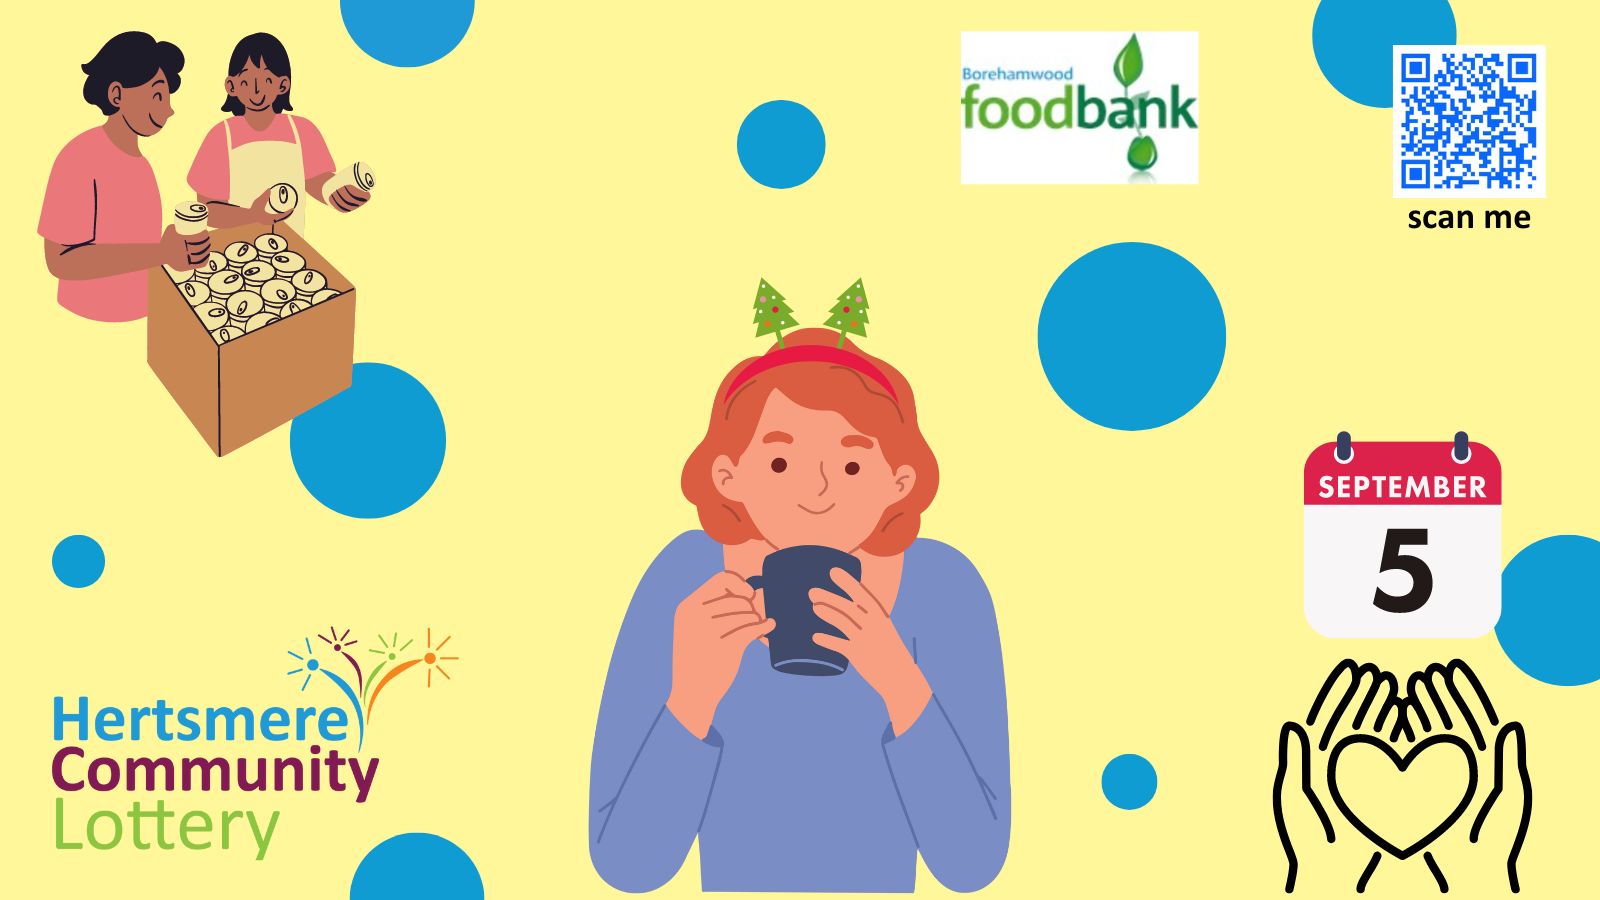 HCL & Borehamwood foodbank logos cartoon image of woman drinking coffee with Christmas tree headband